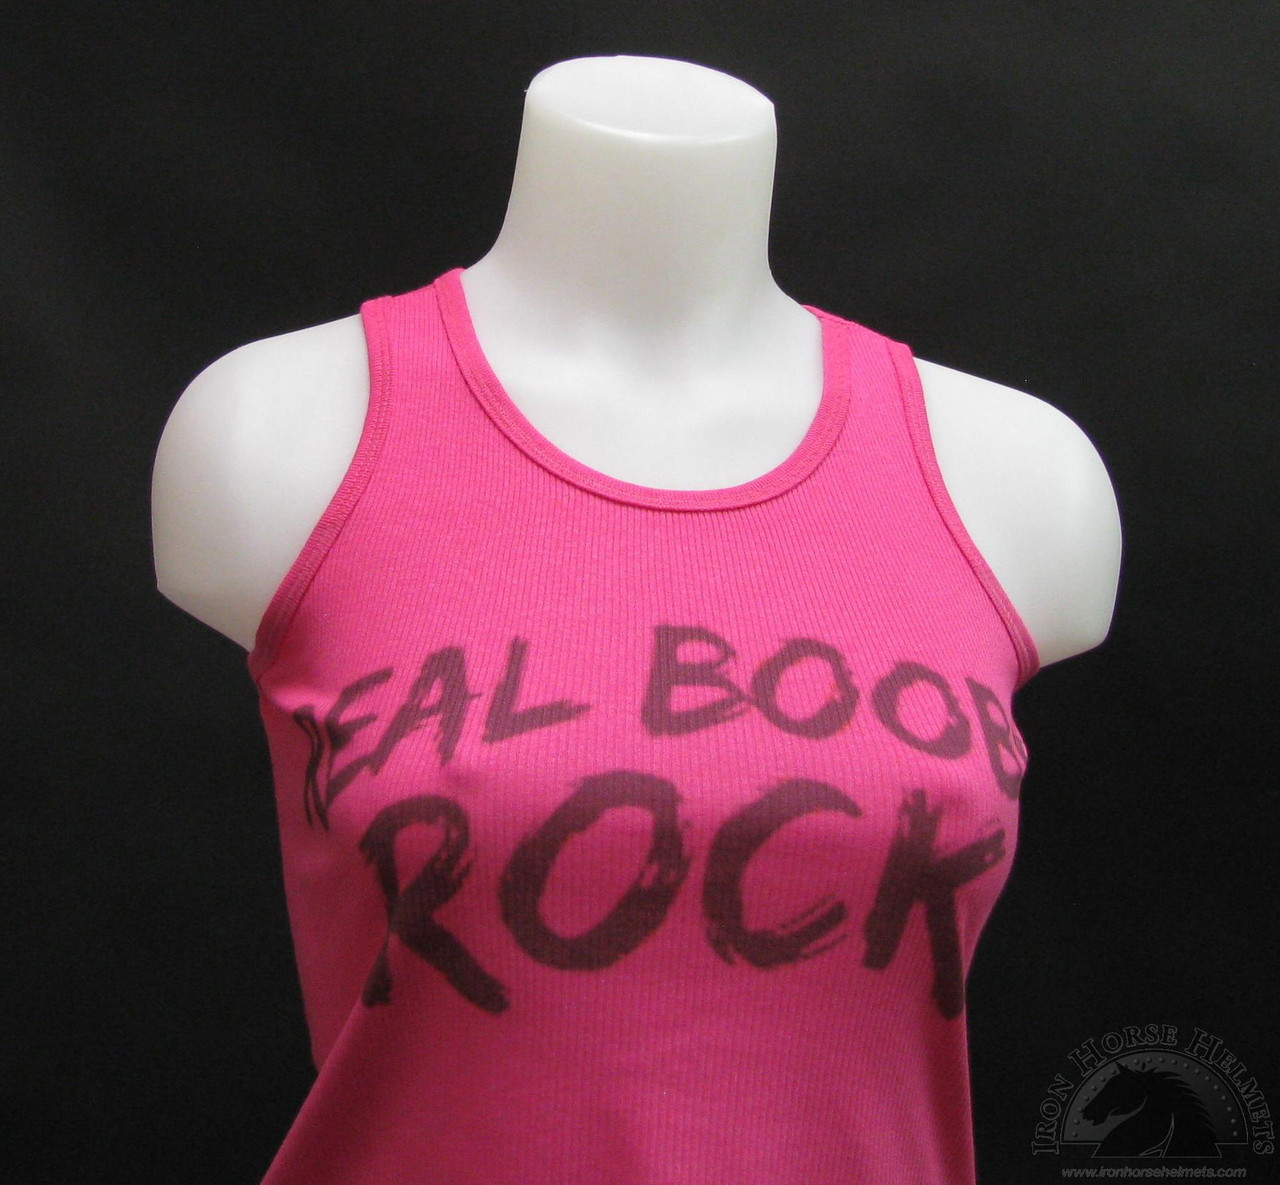 Boobs - Girl Boobs Shirt - Shirt With Boobs  Graphic T-Shirt Dress for  Sale by Melcu